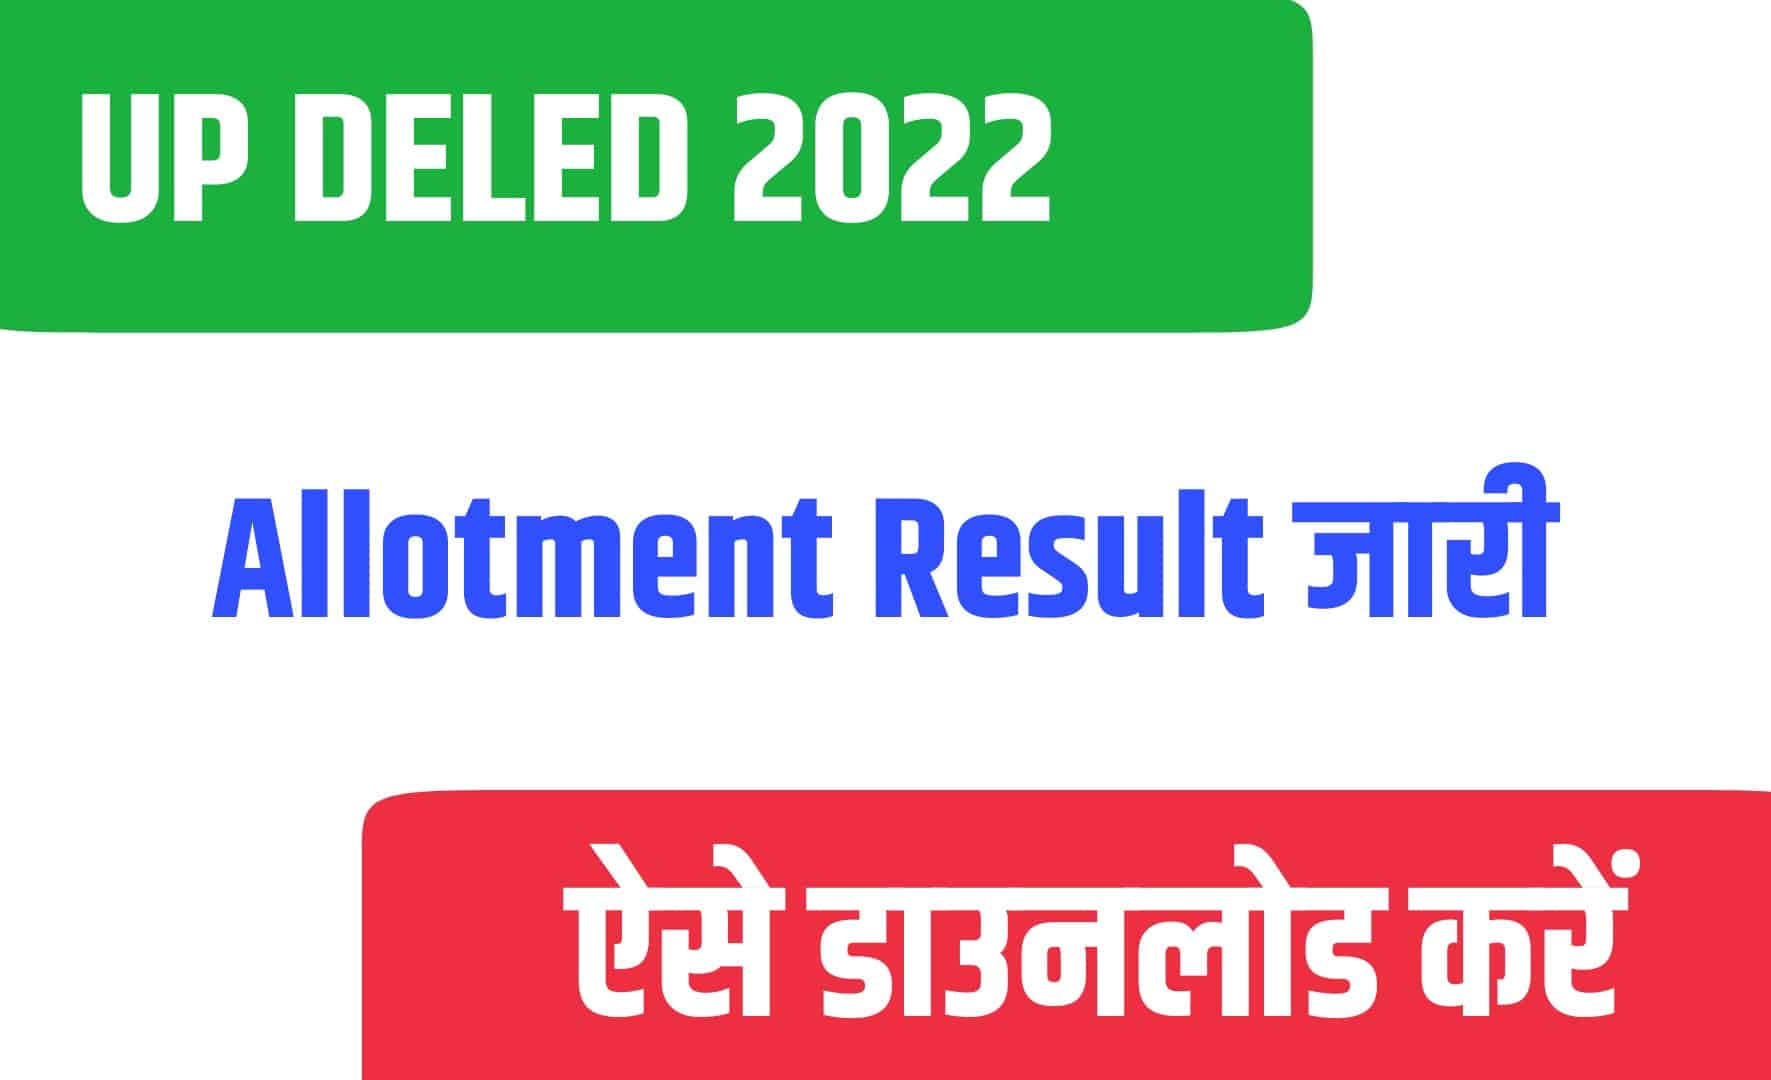 UP DELED 2022 Allotment Result